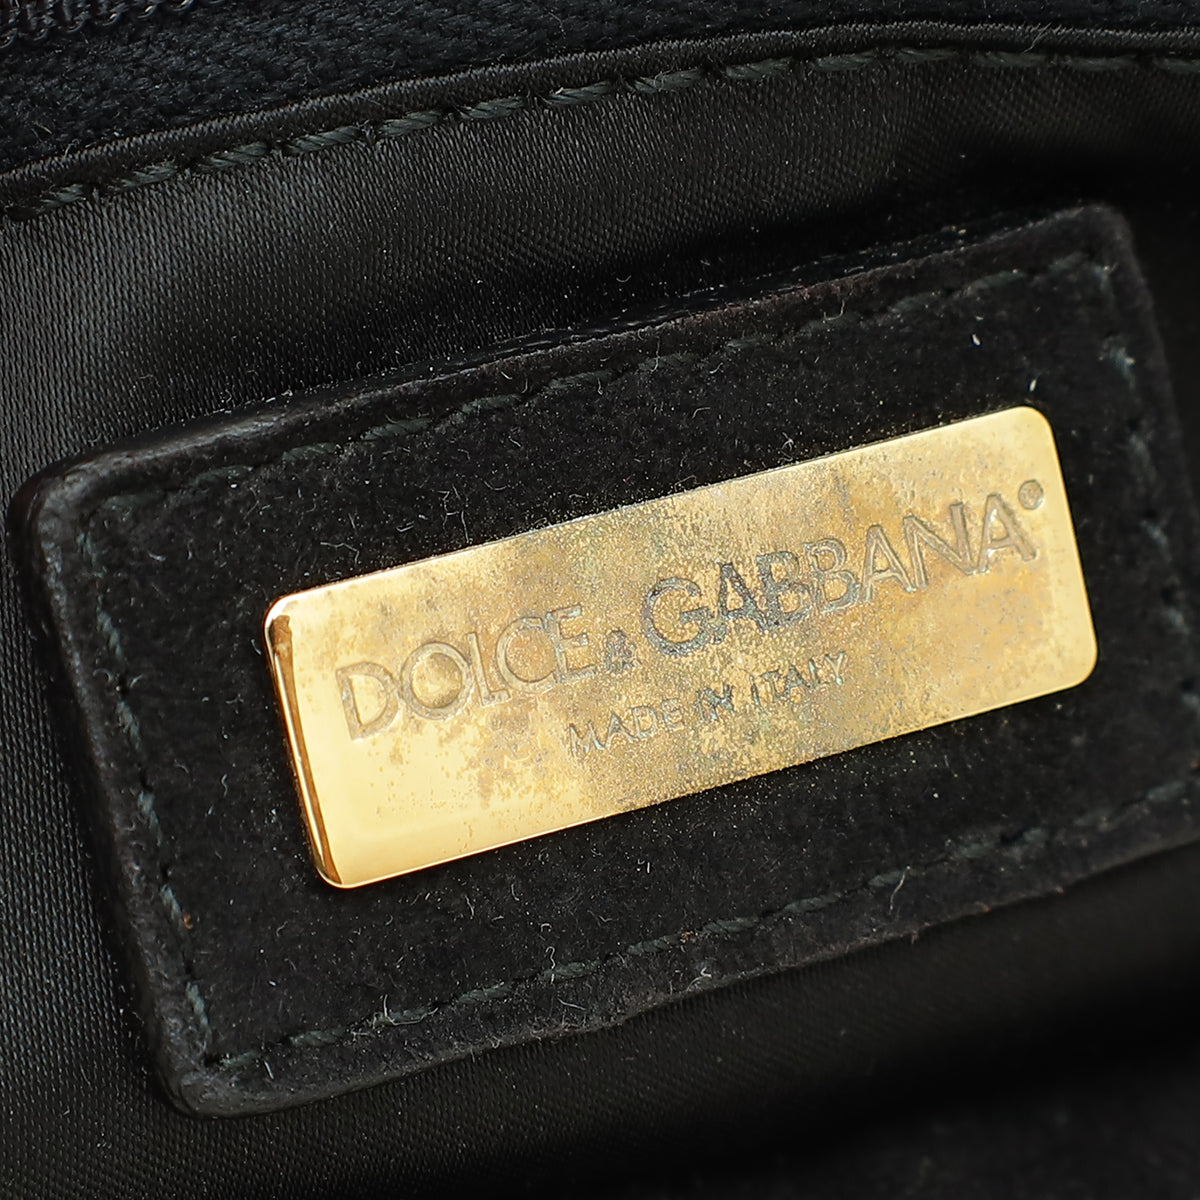 Dolce & Gabbana Gold Sequins Miss Charles Flap Bag